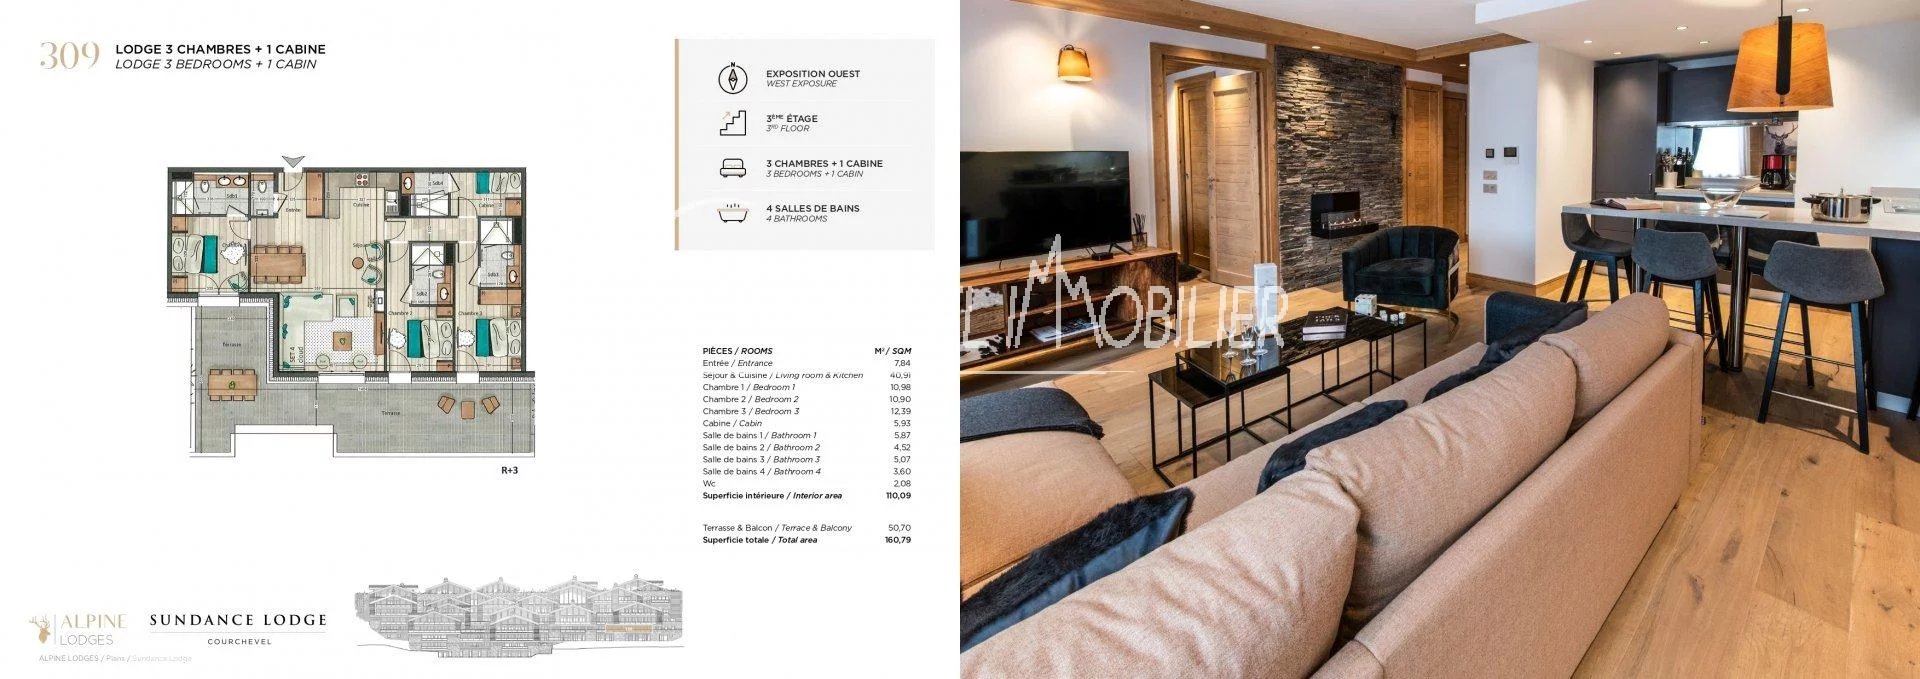 Grand Luxe 3 Bedrooms appartment + cabine 110SQM - Investor Profile